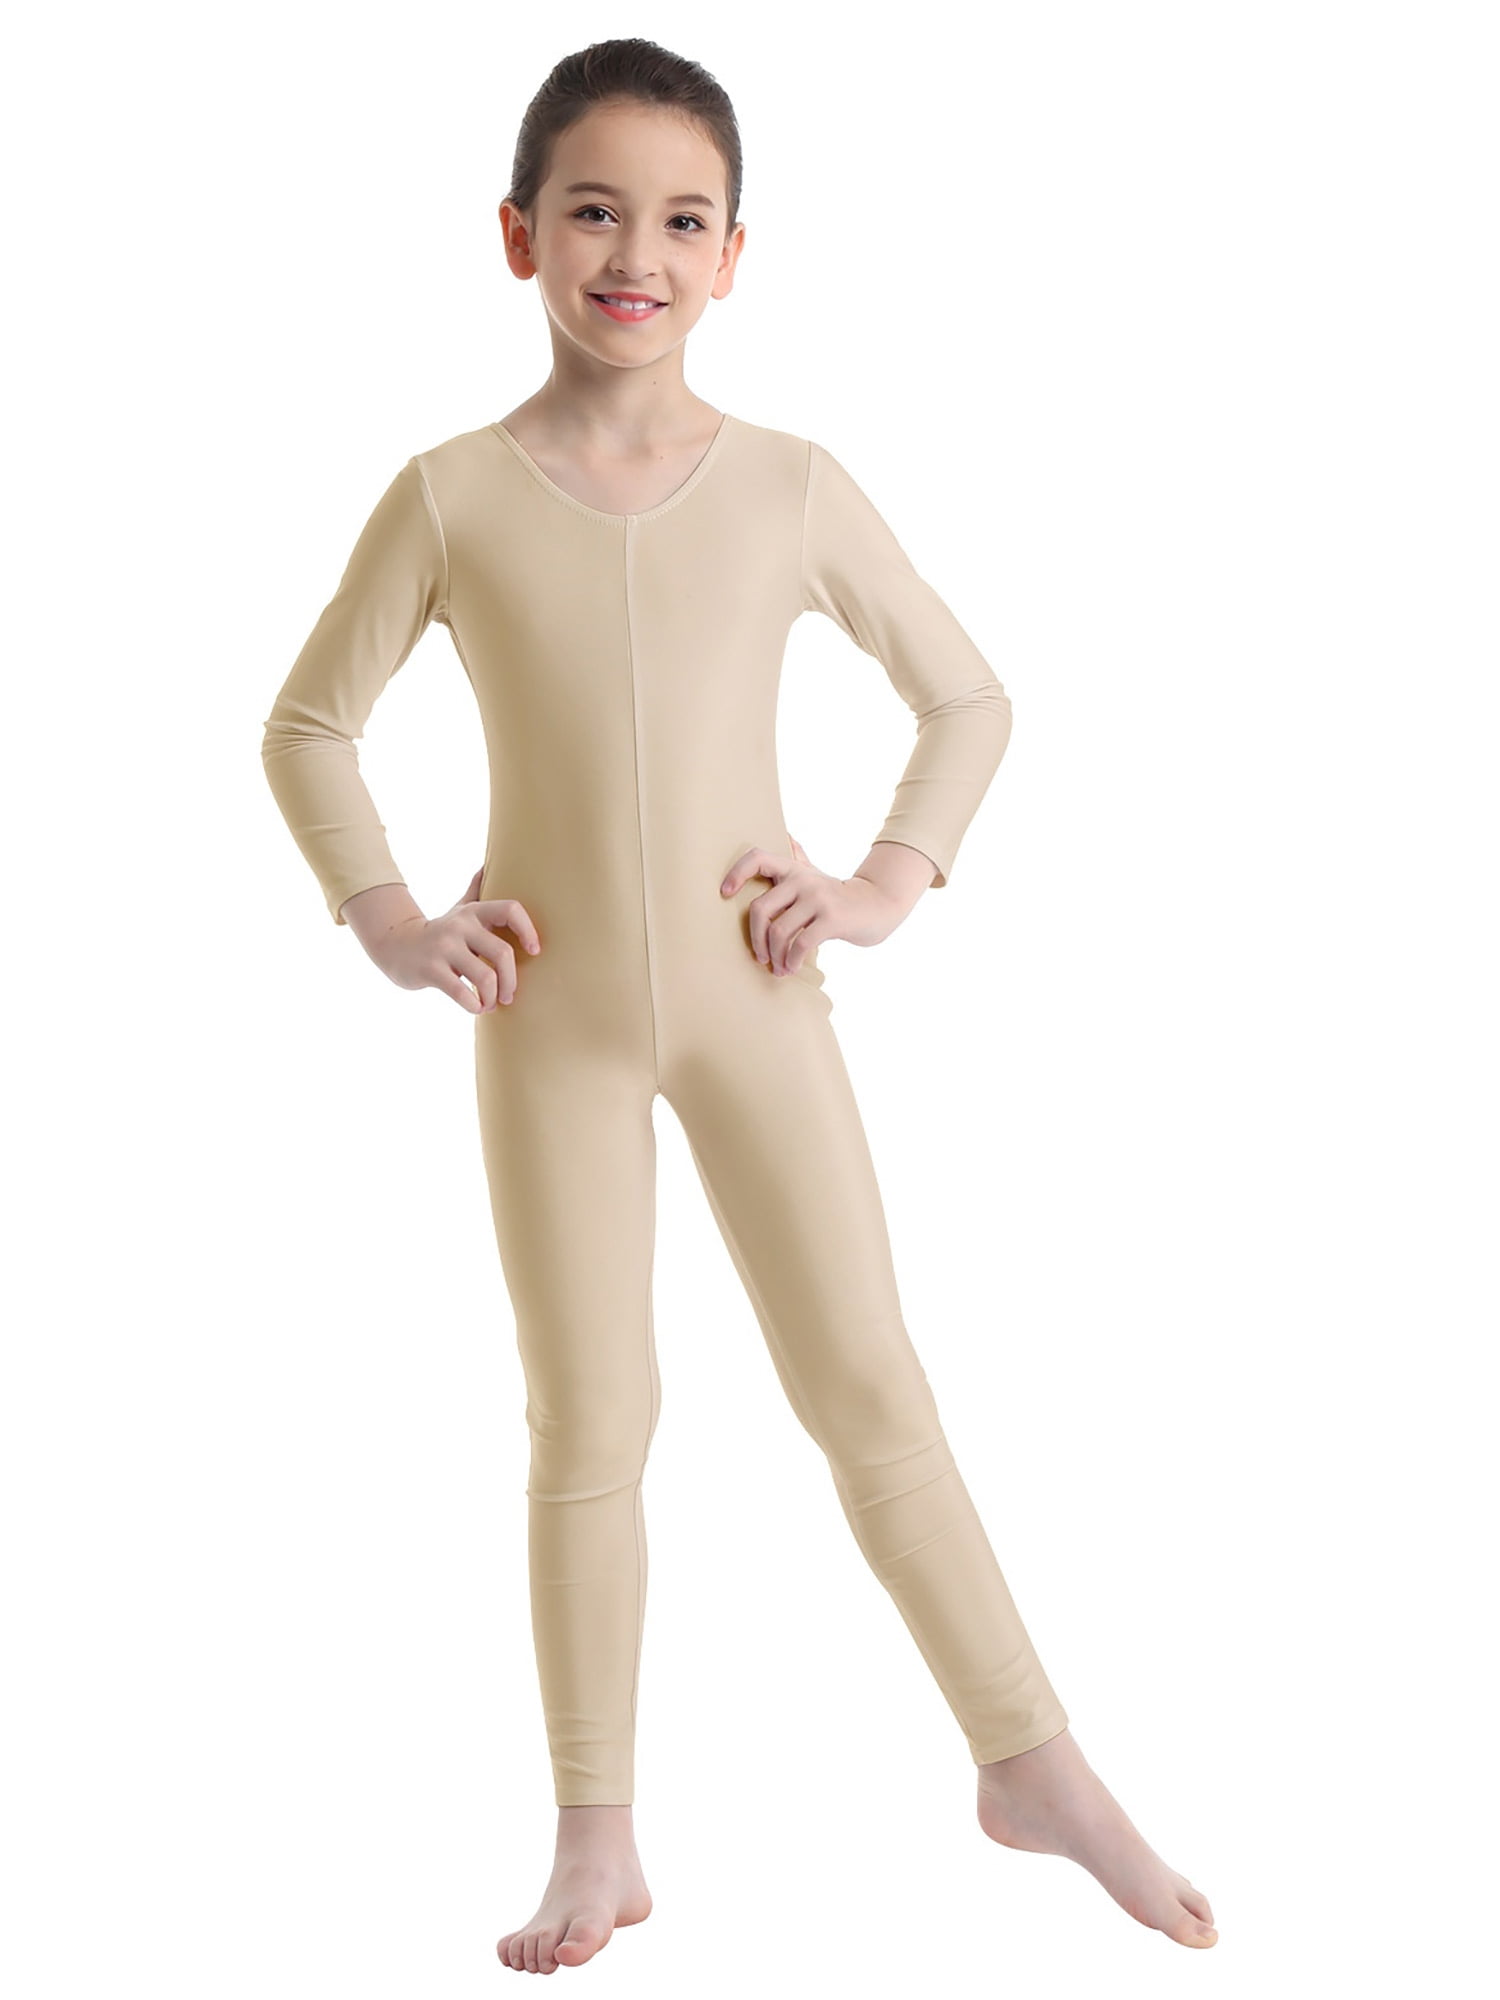 Girls Ballet Dance Leotards Kids Gymnastics Full Body Jumpsuit Training Costumes